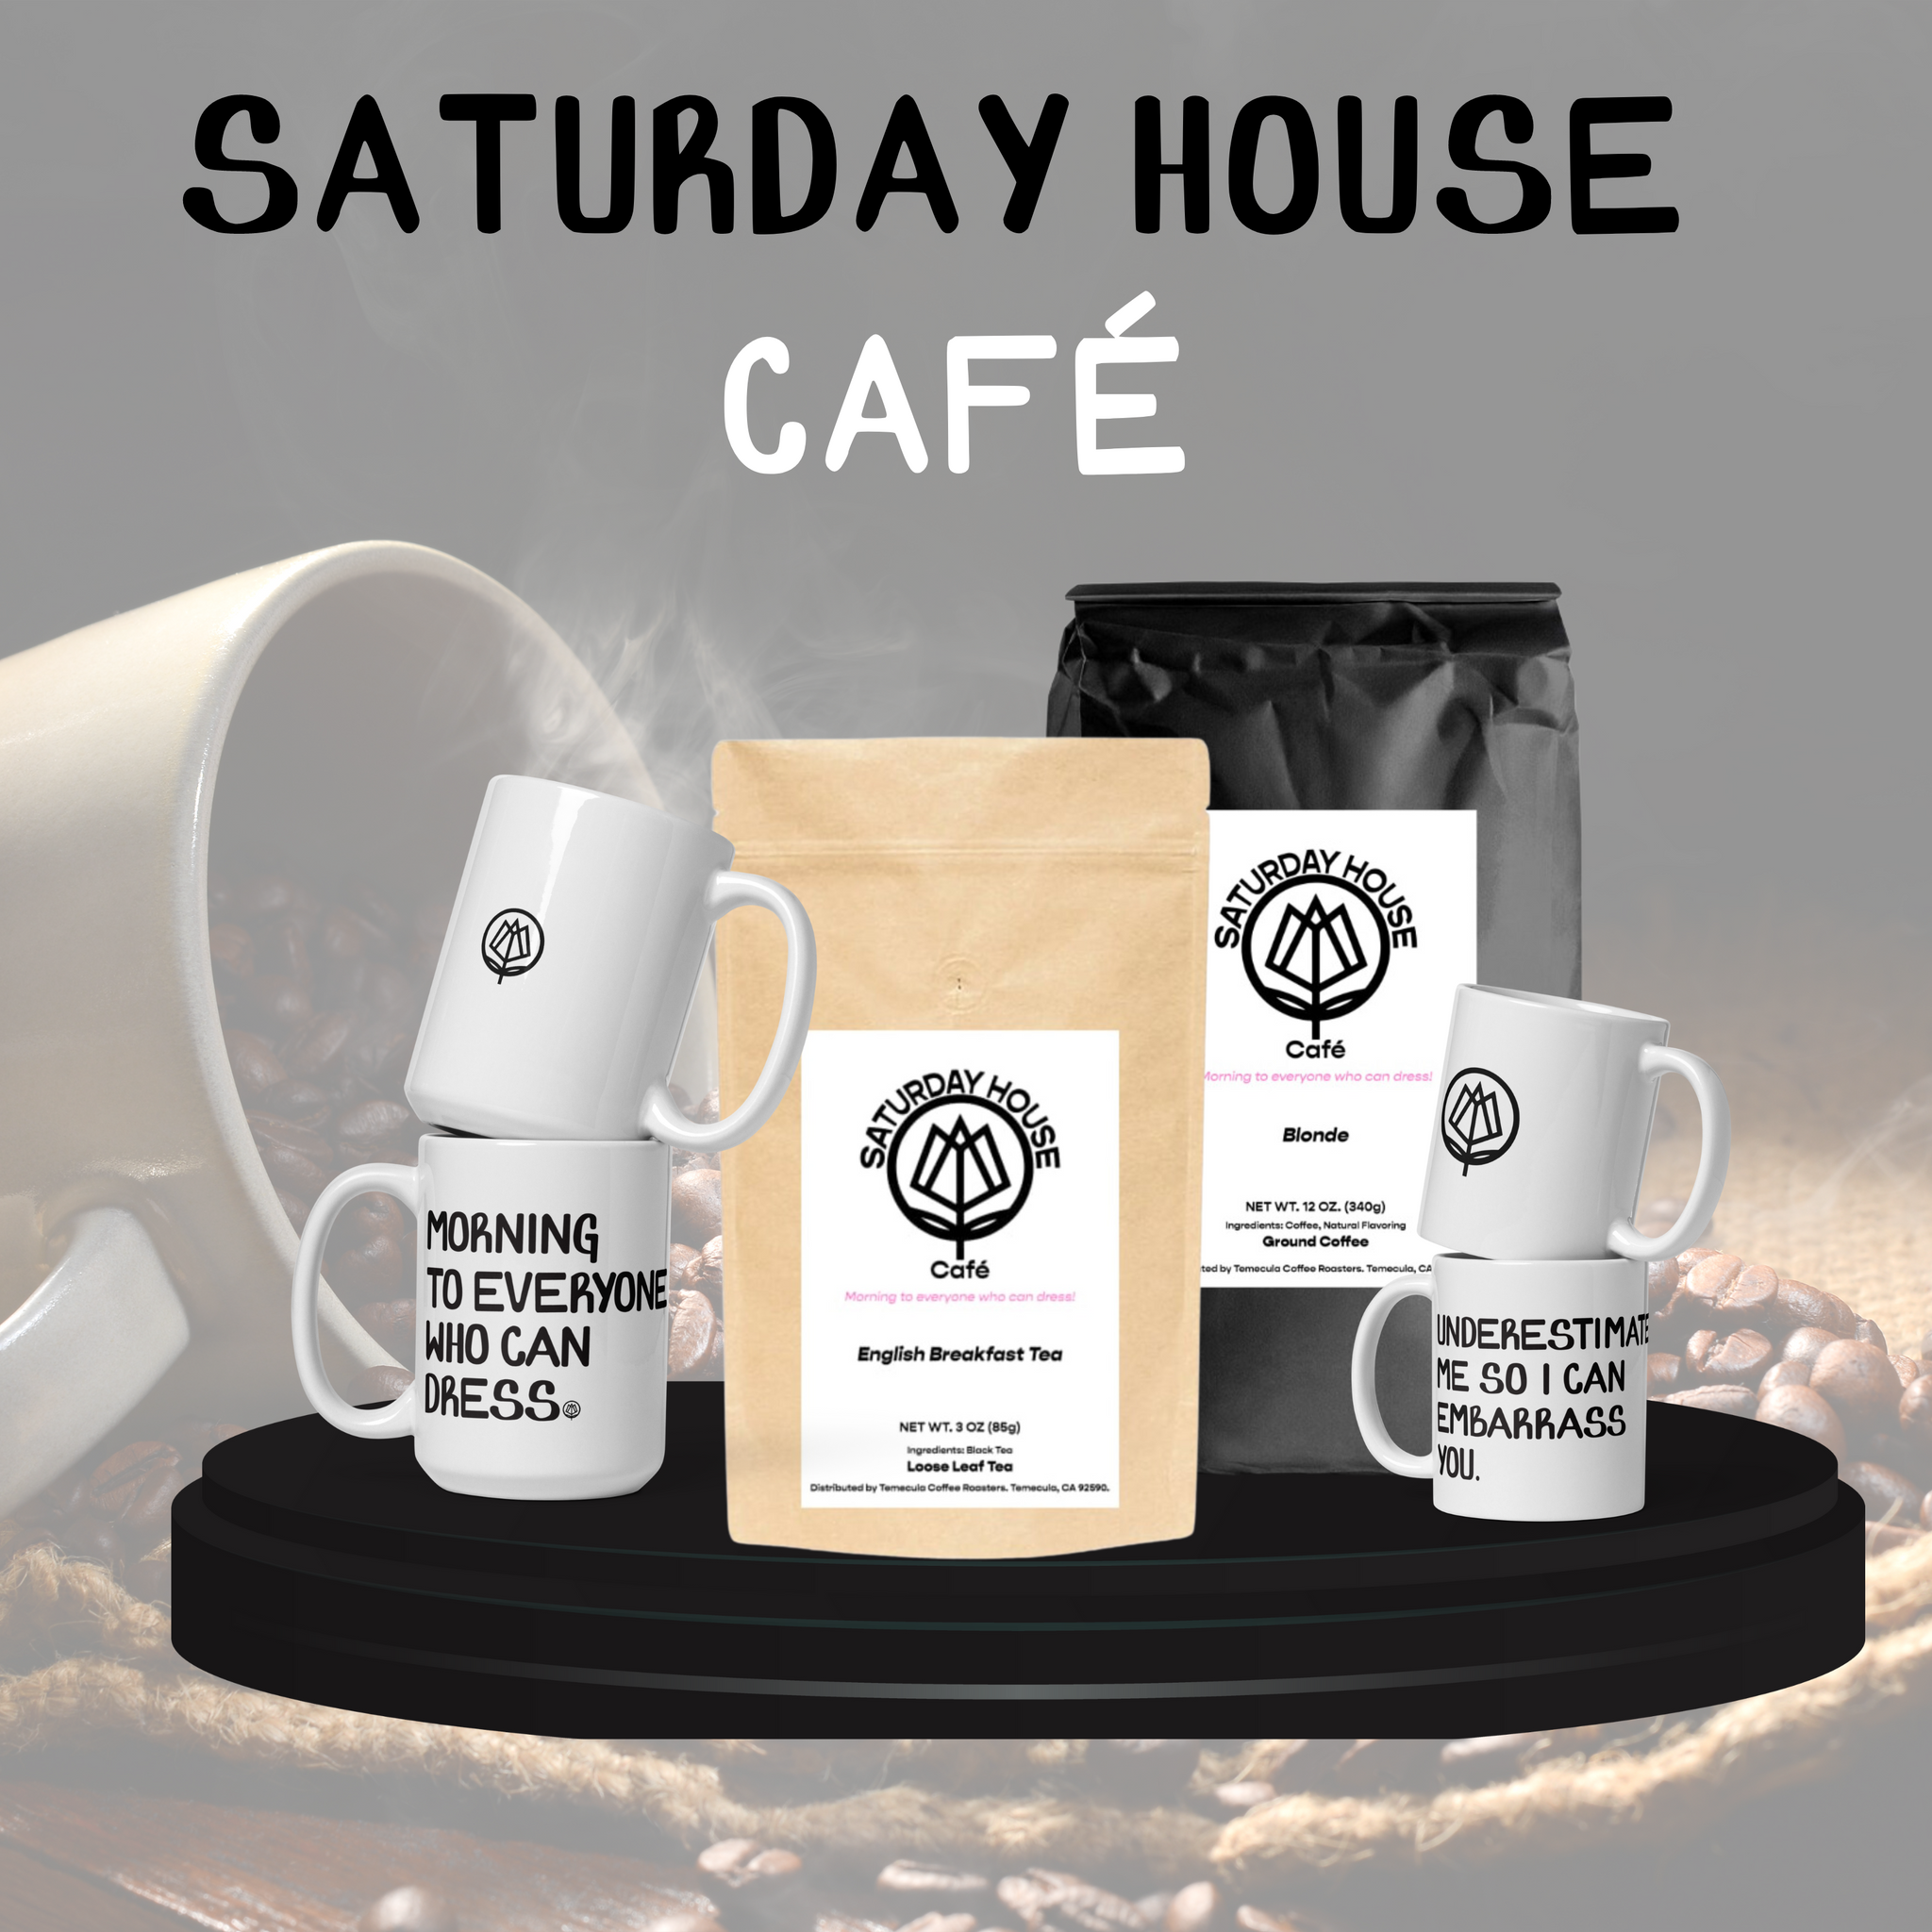 Saturday House Café